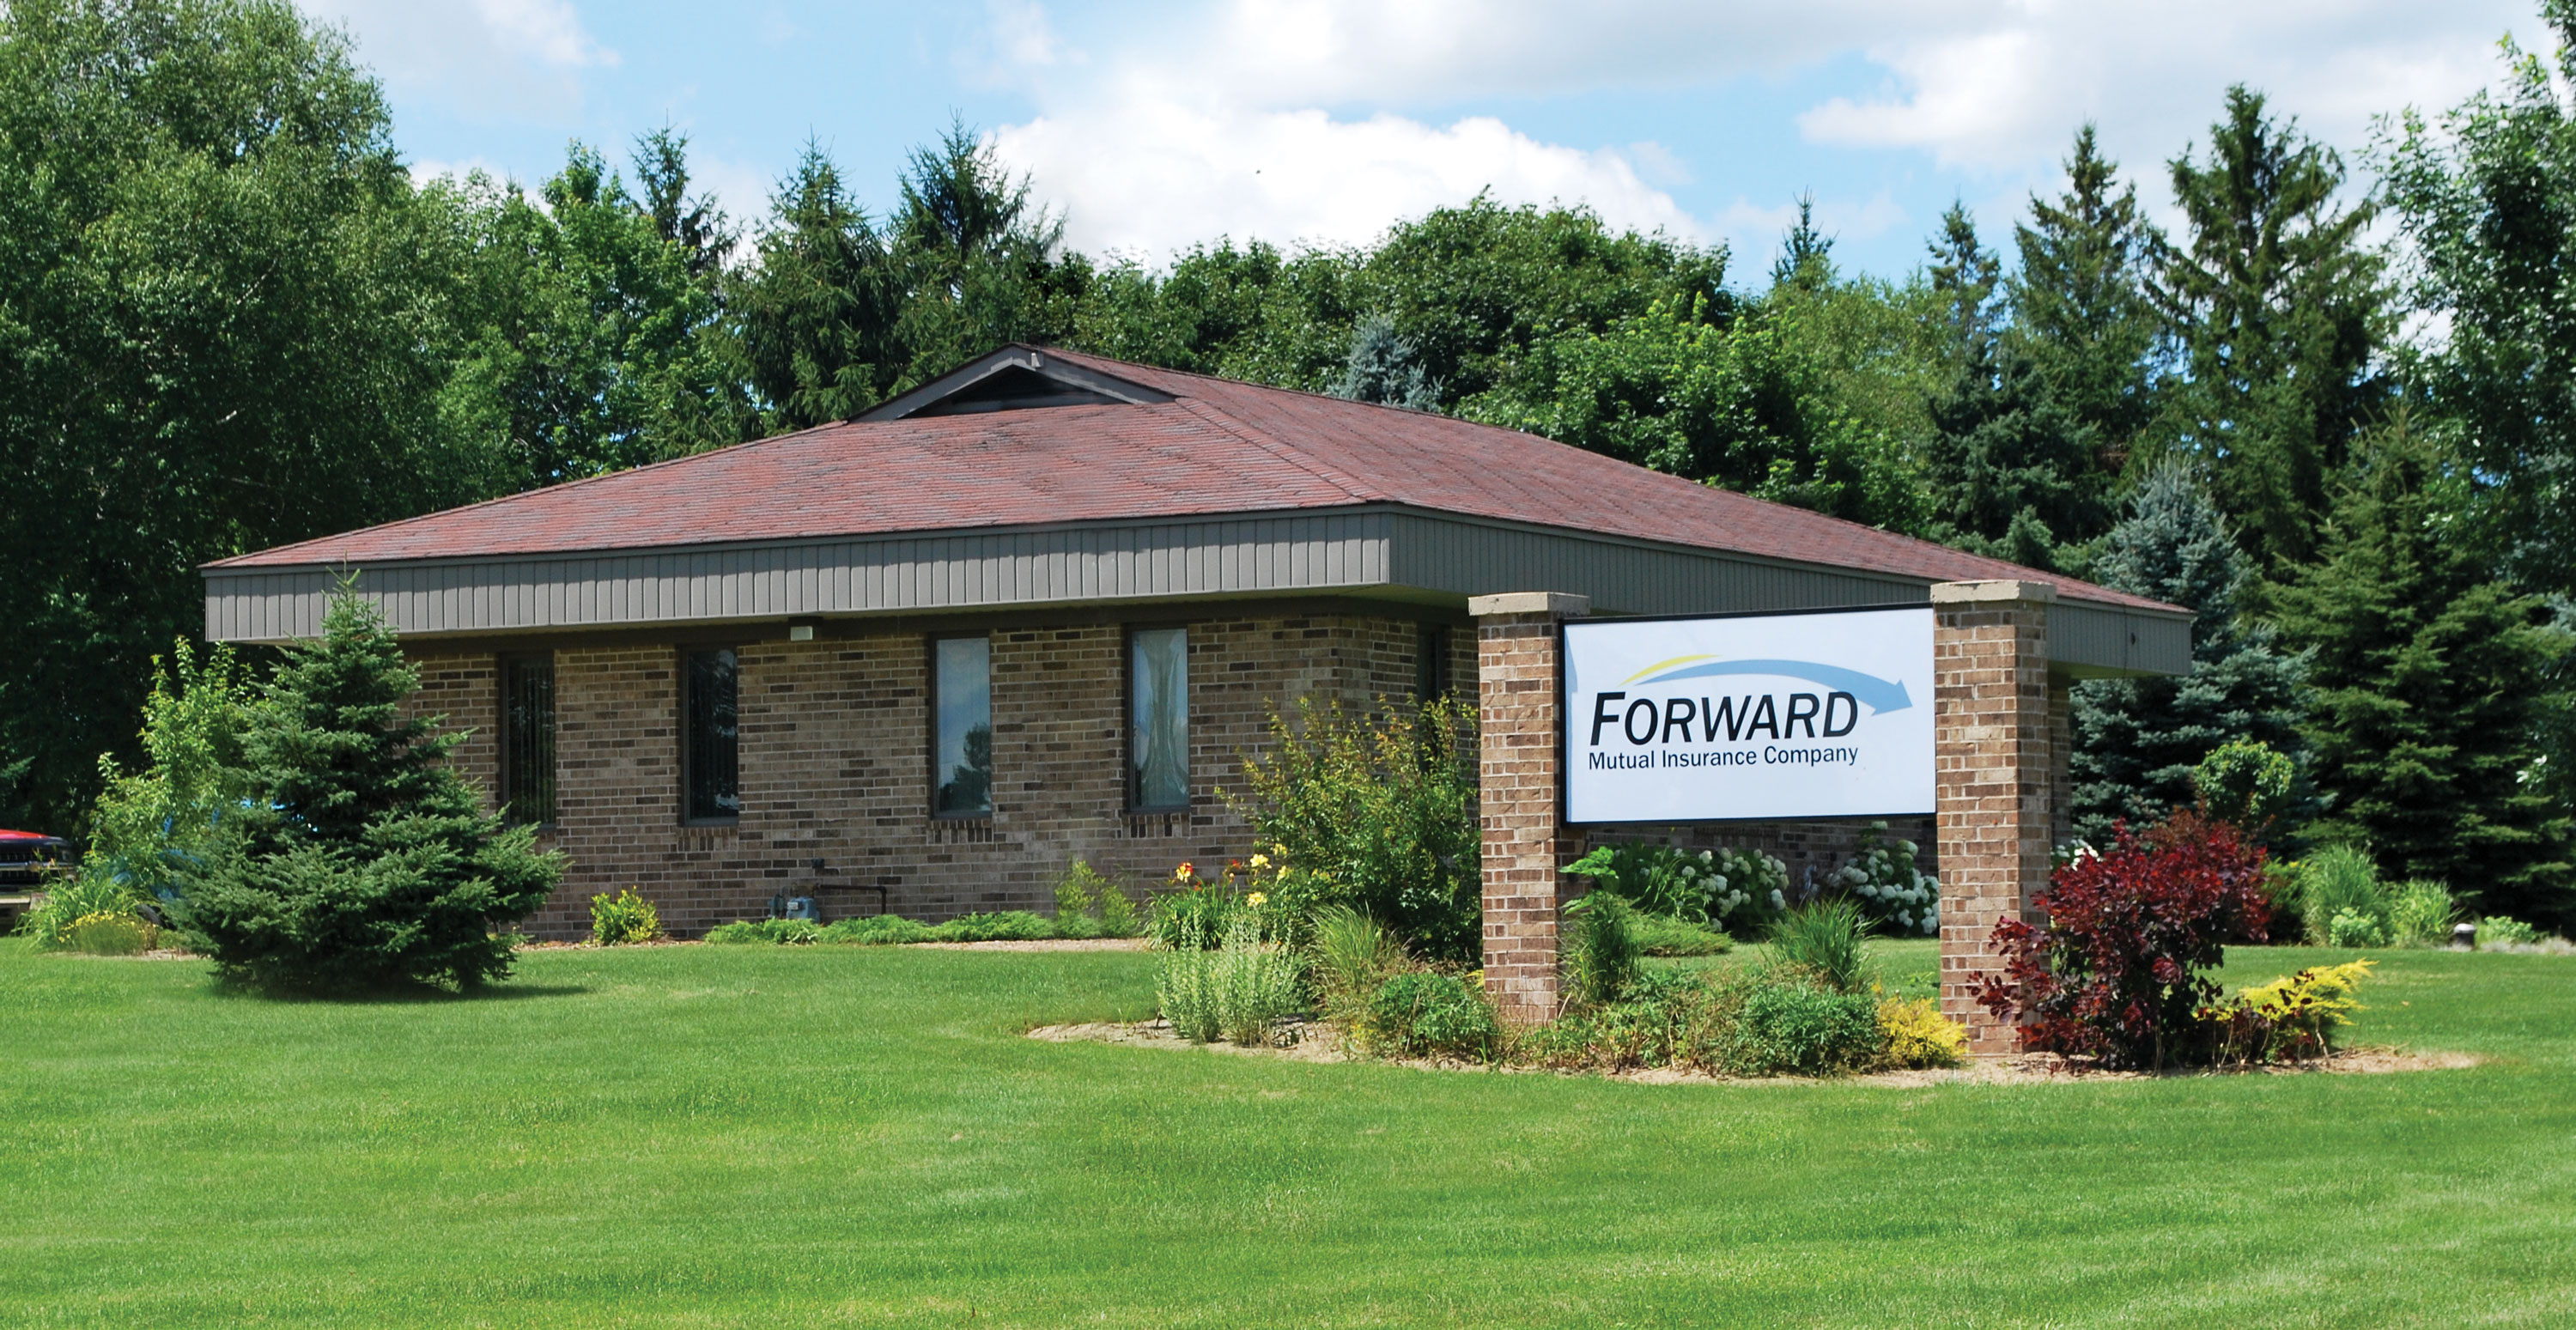 Forward Mutual Insurance Company